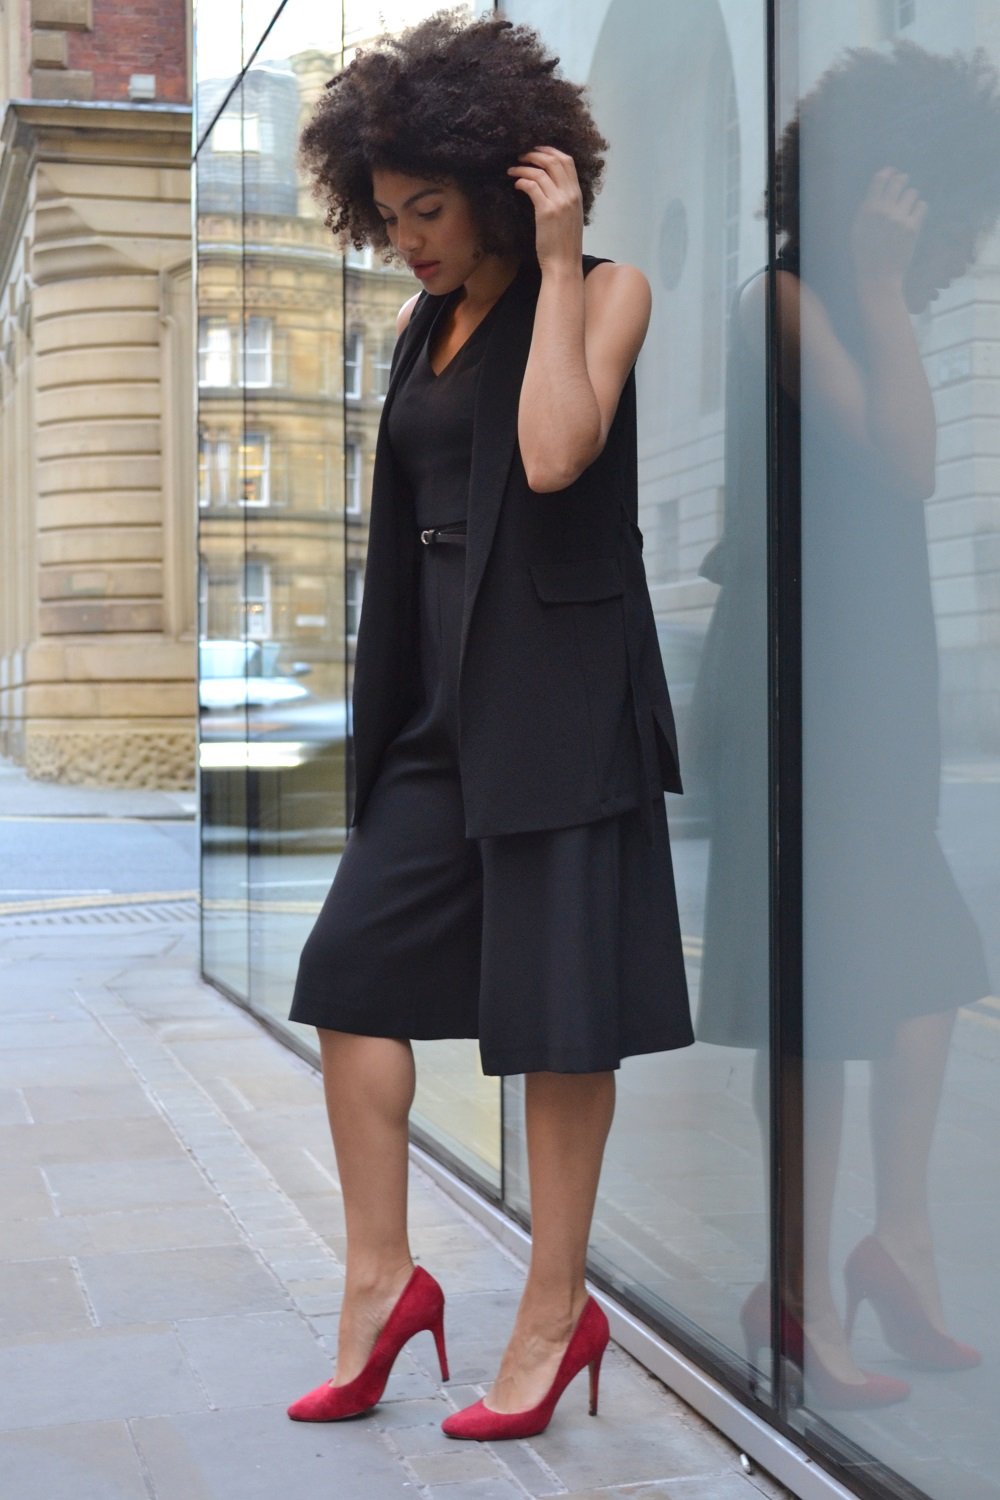 Fashion blogger Samio culotte jumpsuit outfit